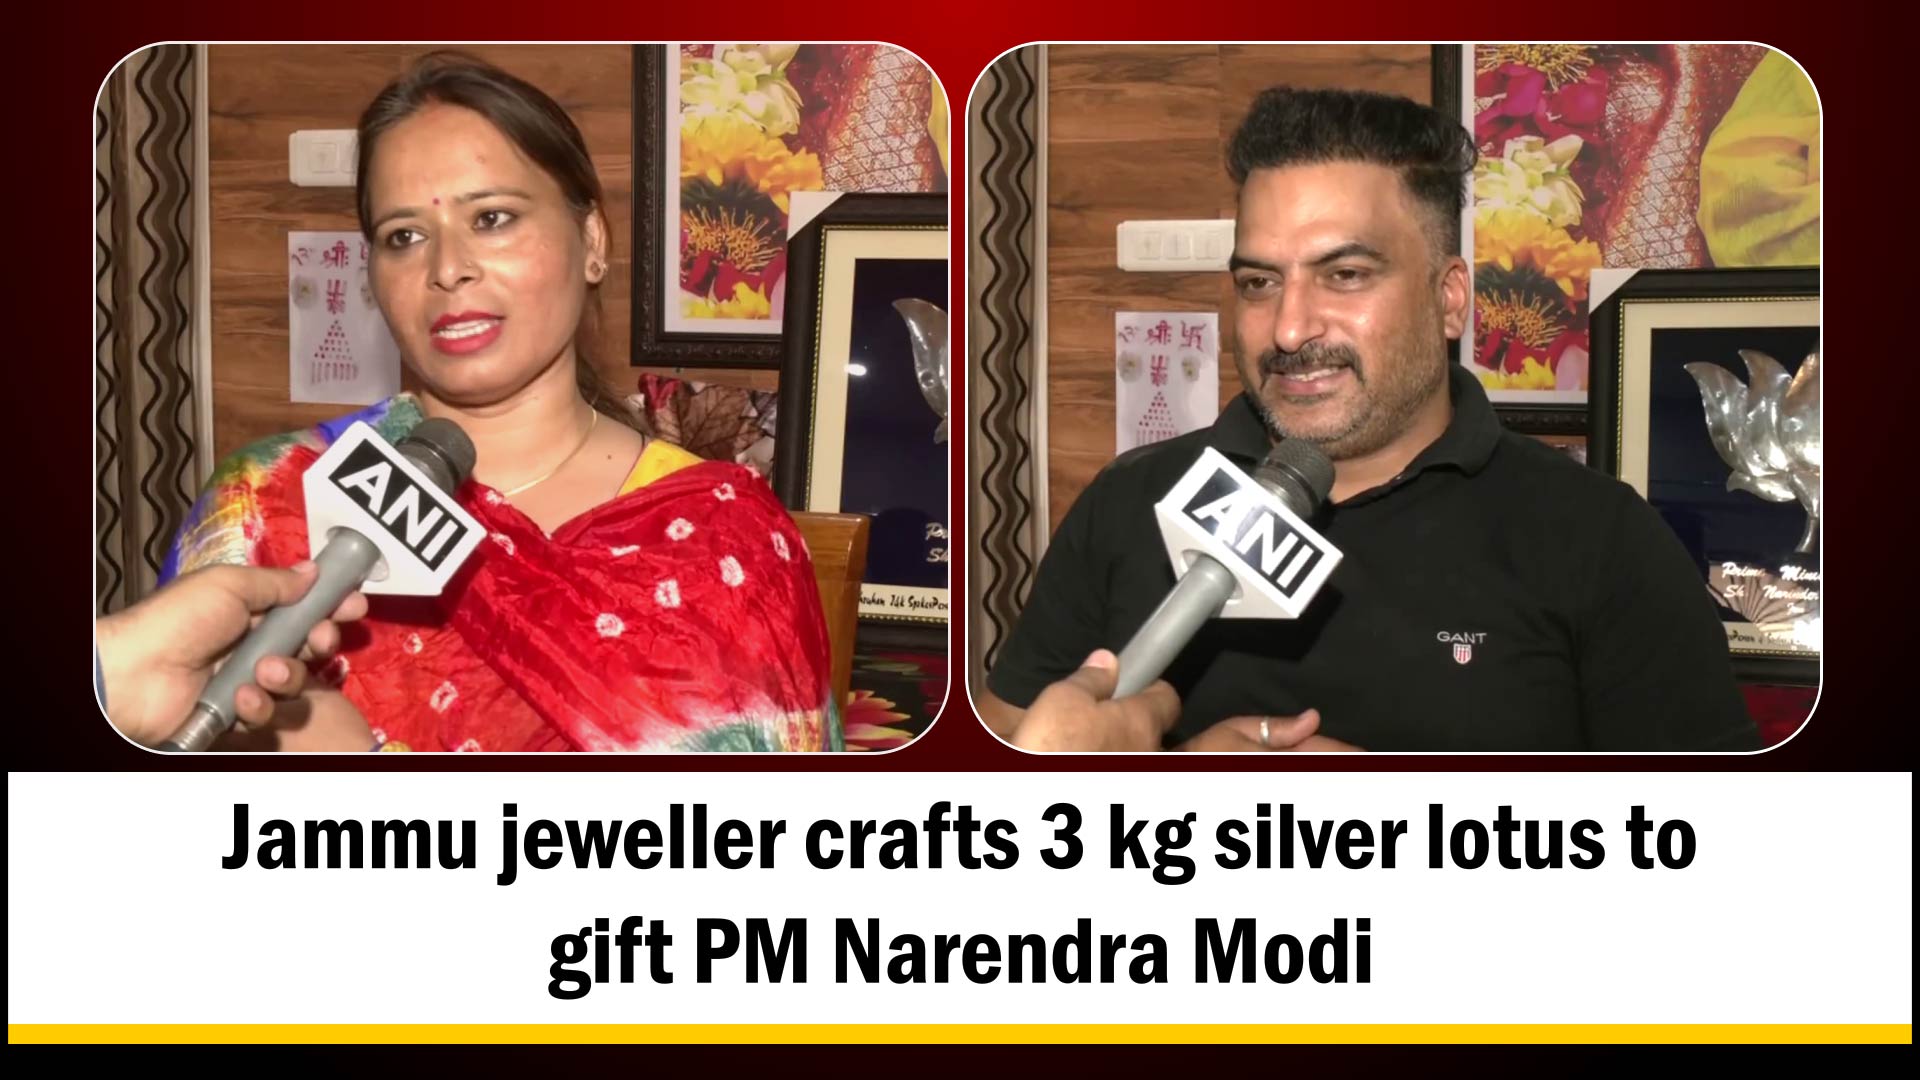 Jammu jeweller crafts 3 kg silver lotus to gift PM Narendra Modi